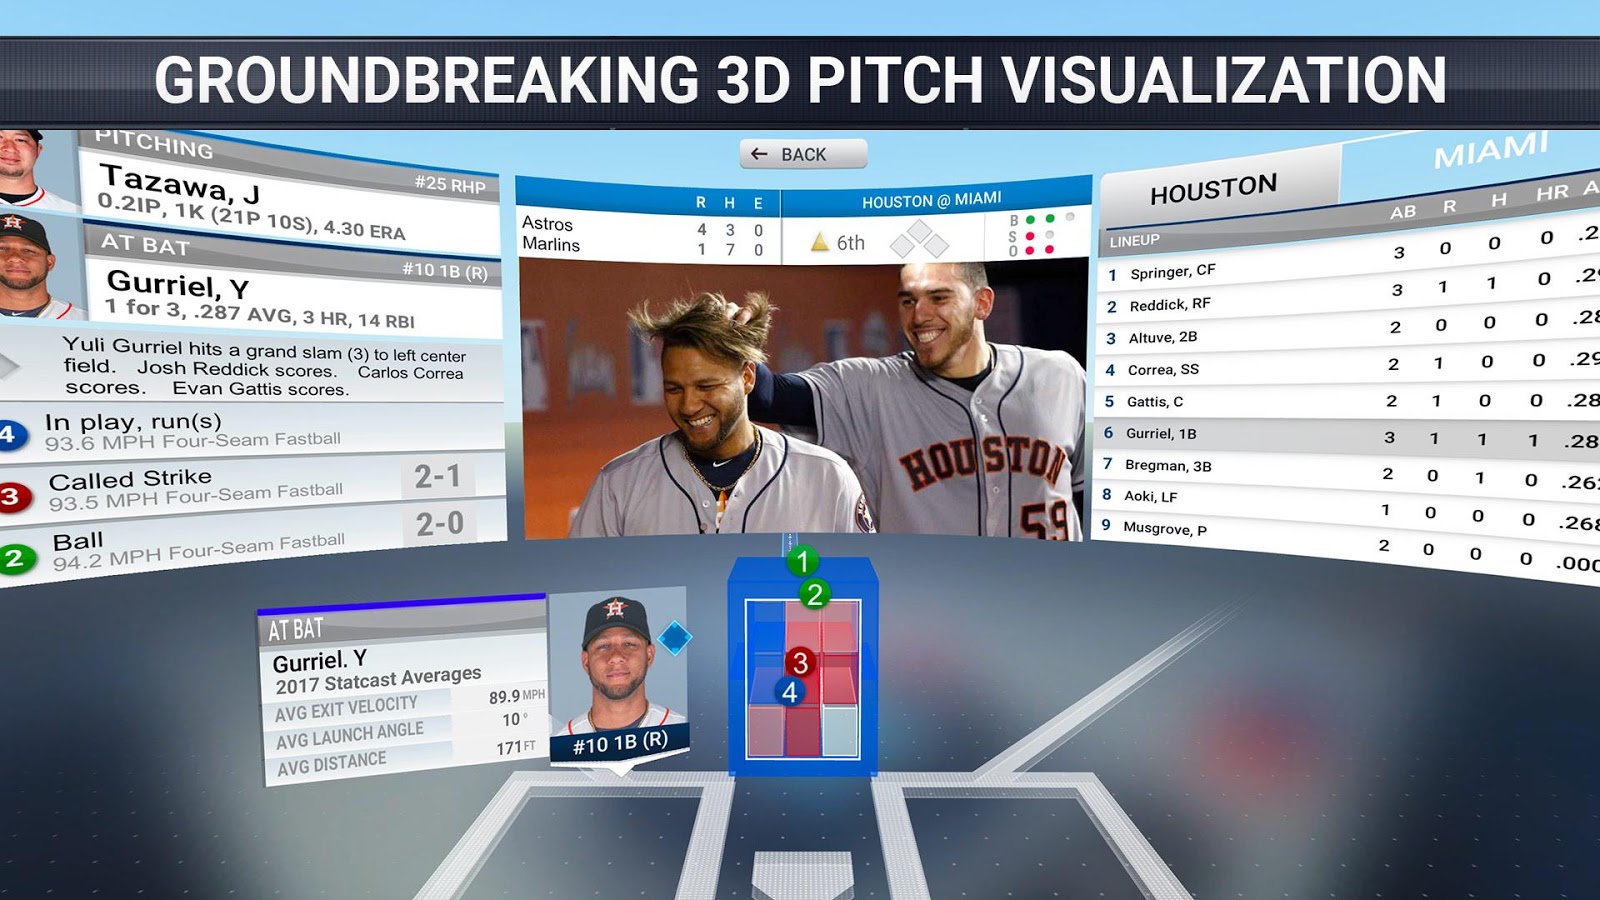 MLB.com At Bat VR